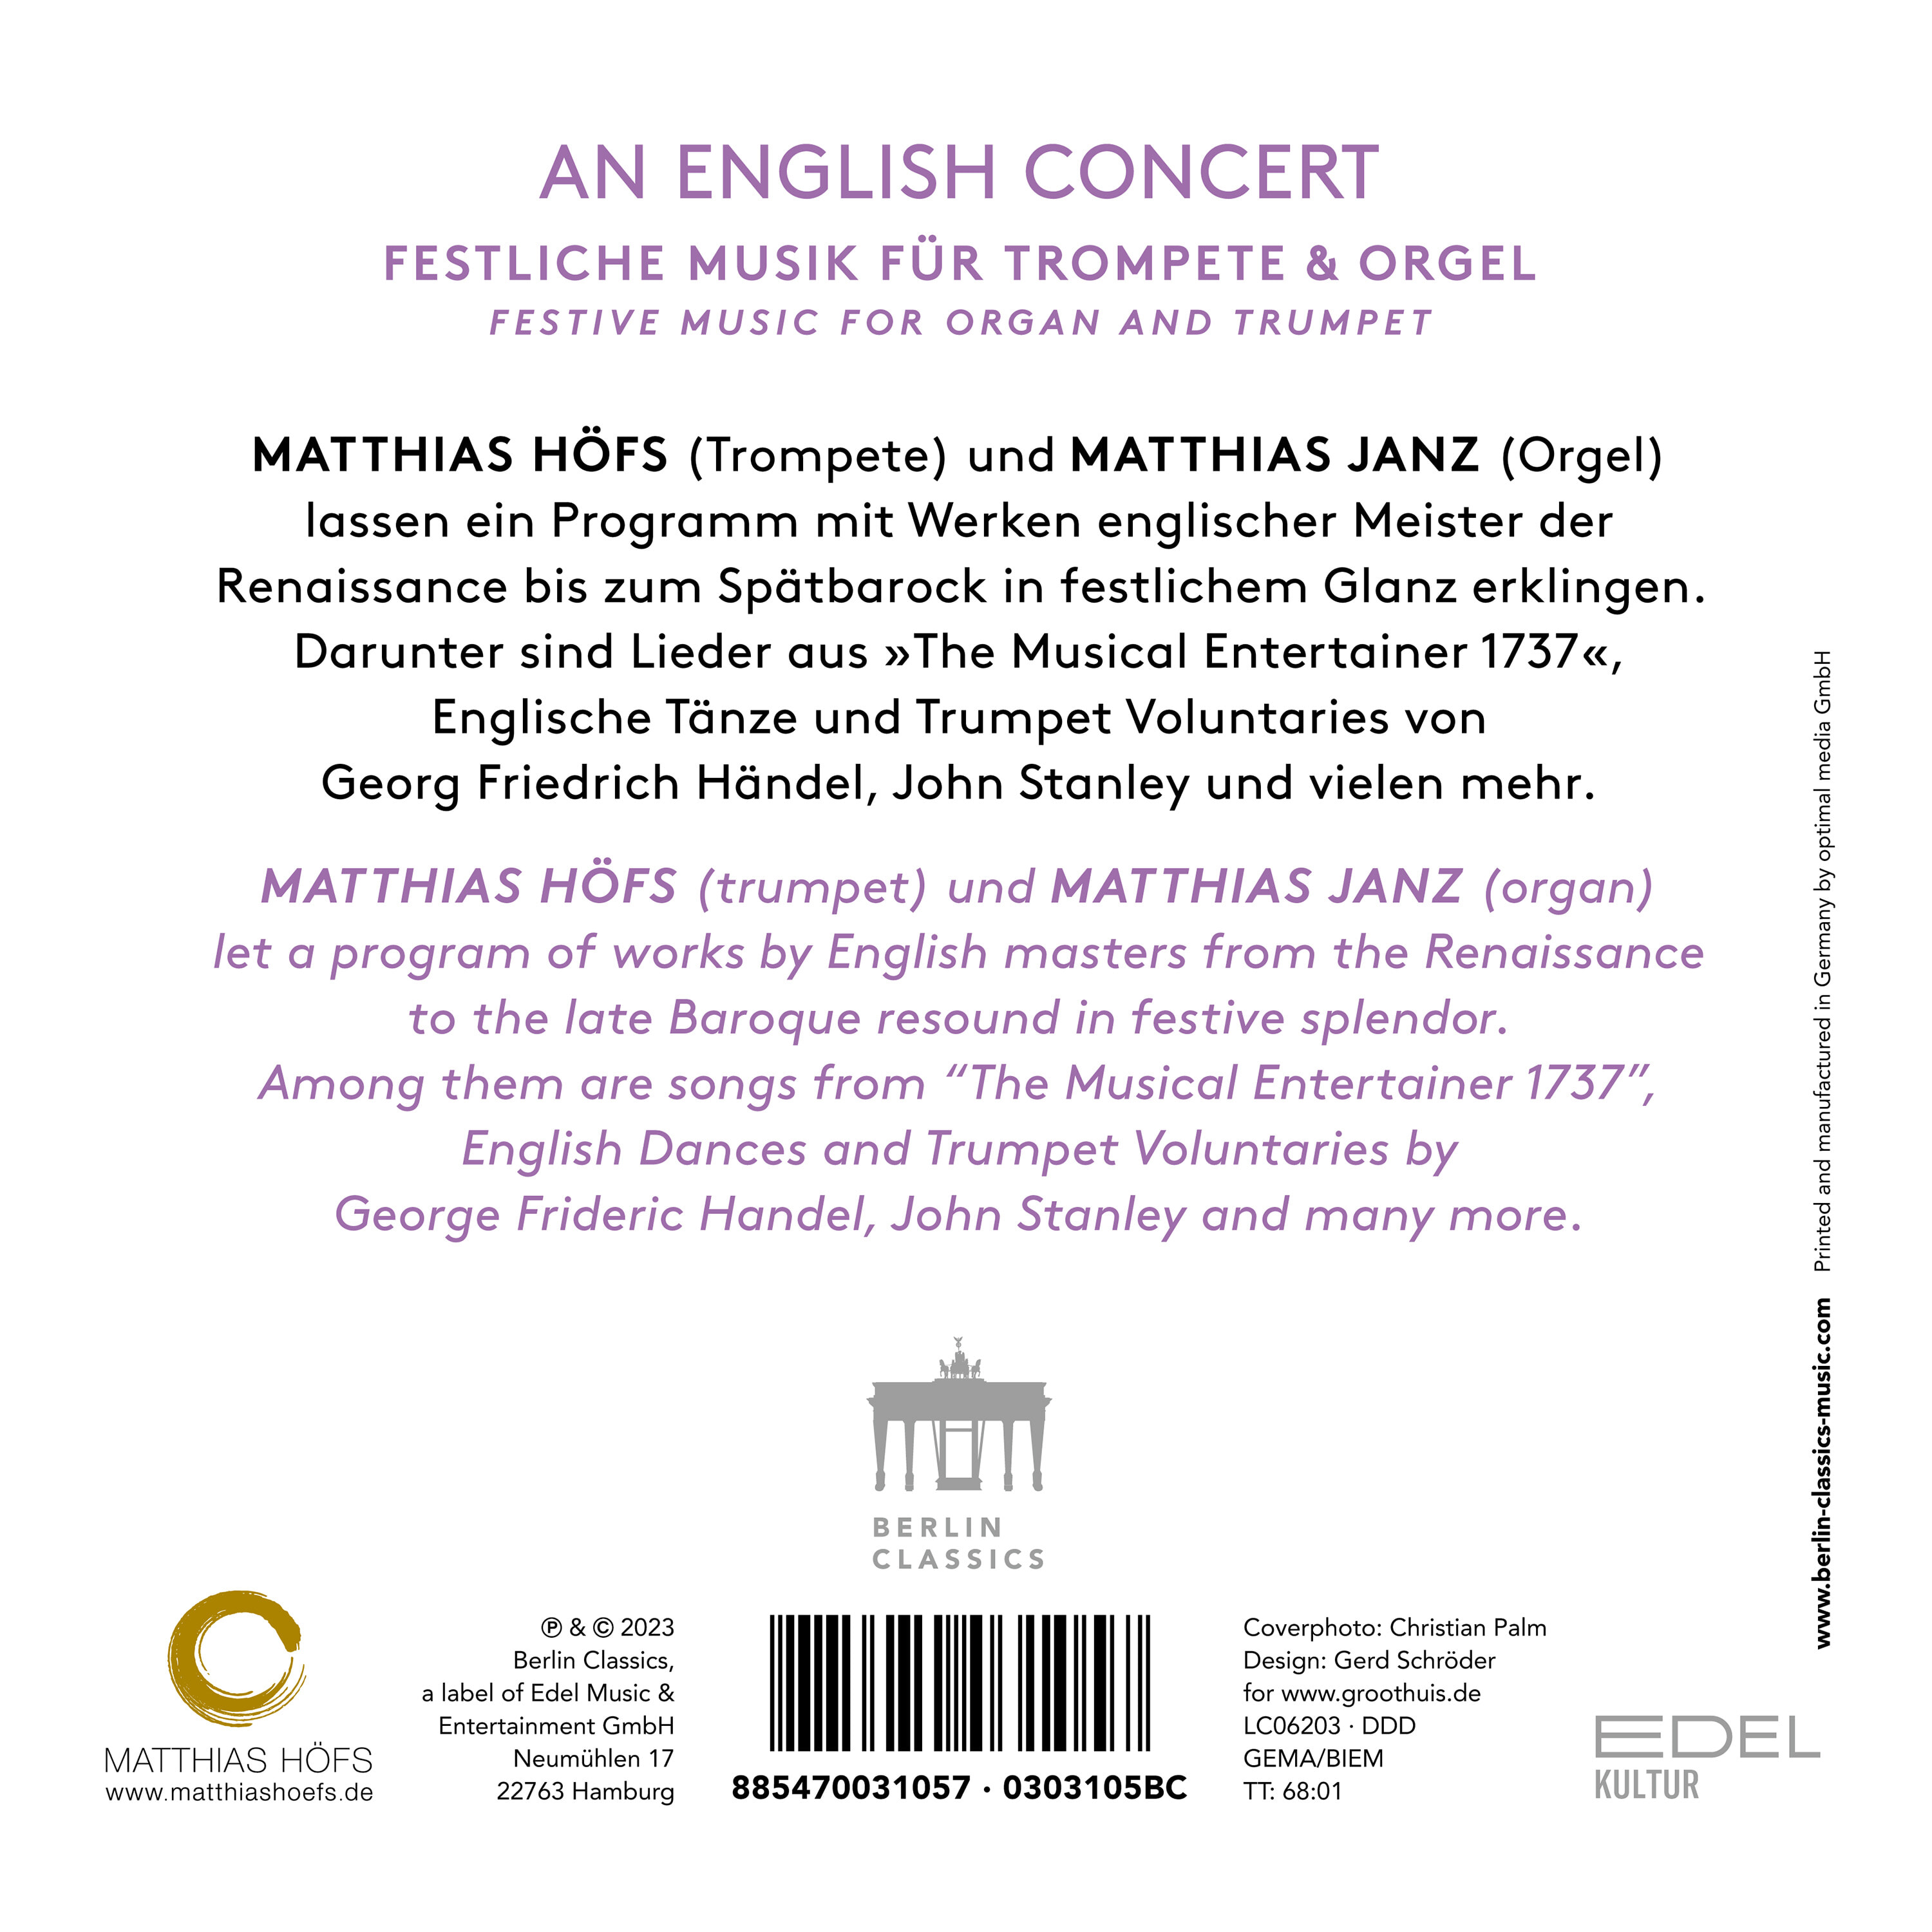 Matthias Hofs / Matthias Janz 잉글리시 콘서트 - 트럼펫과 오르간을 위한 축전적 작품들 (An English Concert - festliche Musik Fur Trompete & Orgel)